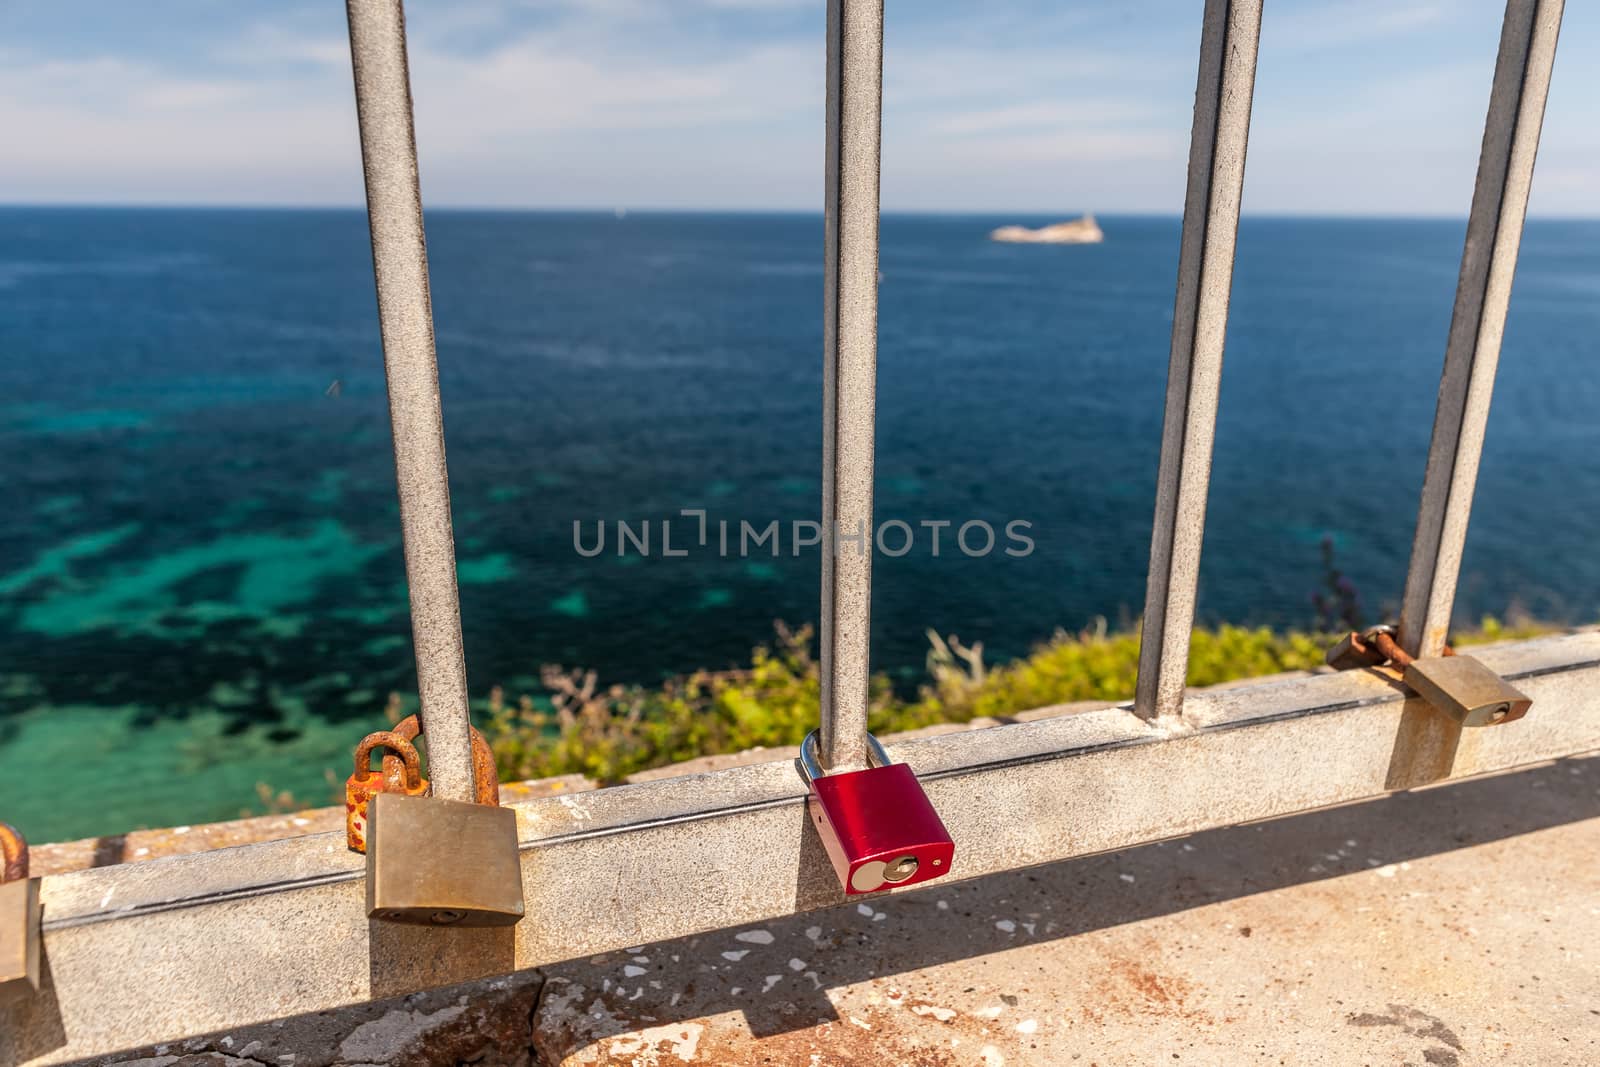 Metal padlock - memory locks on the bridge, symbols of love against the background of the sea